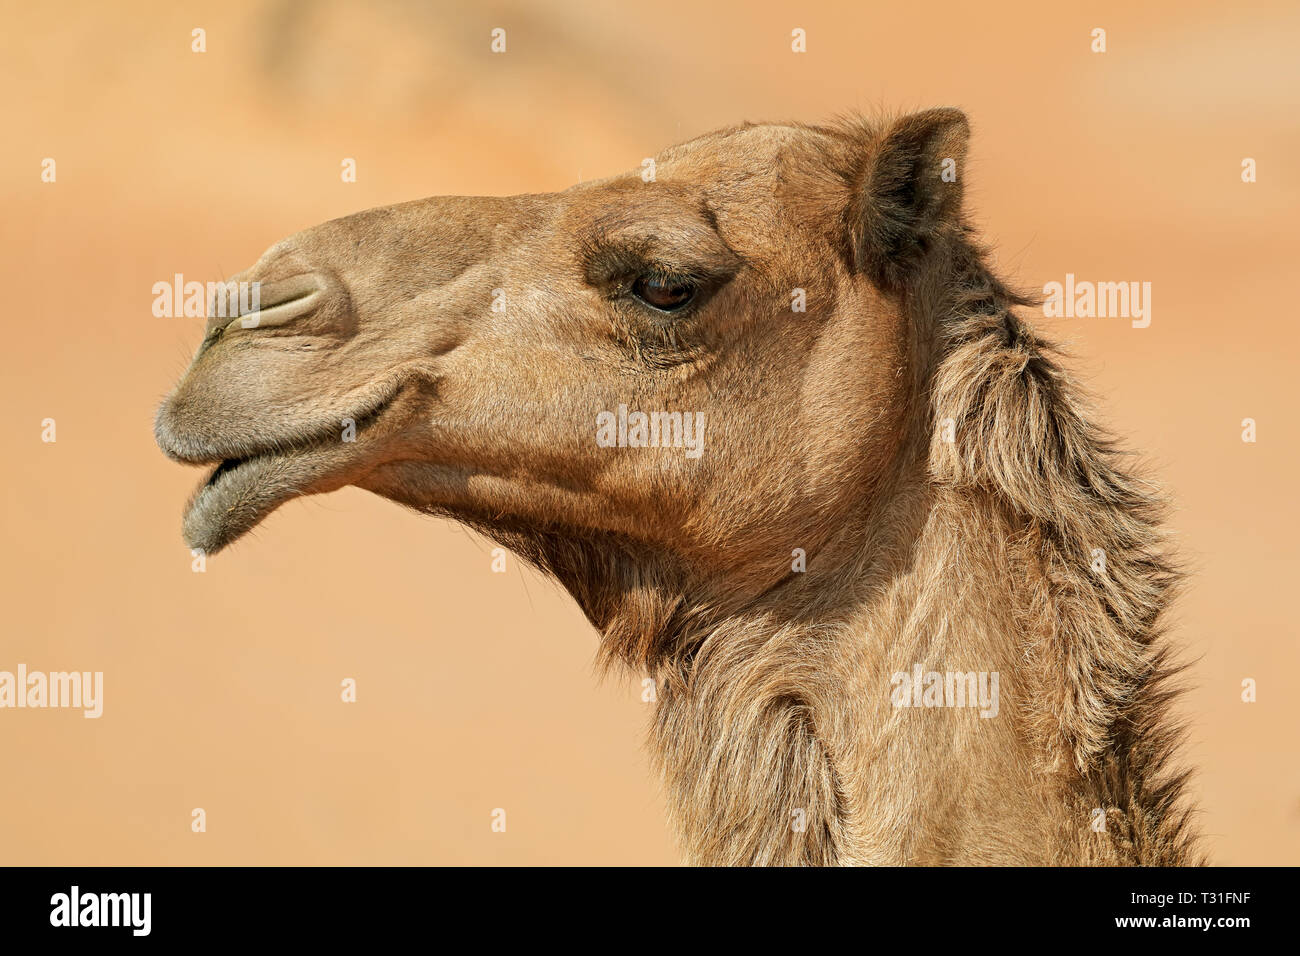 Close-up portrait of a one-humped camel (Camelus dromedarius), Arabian Peninsula Stock Photo